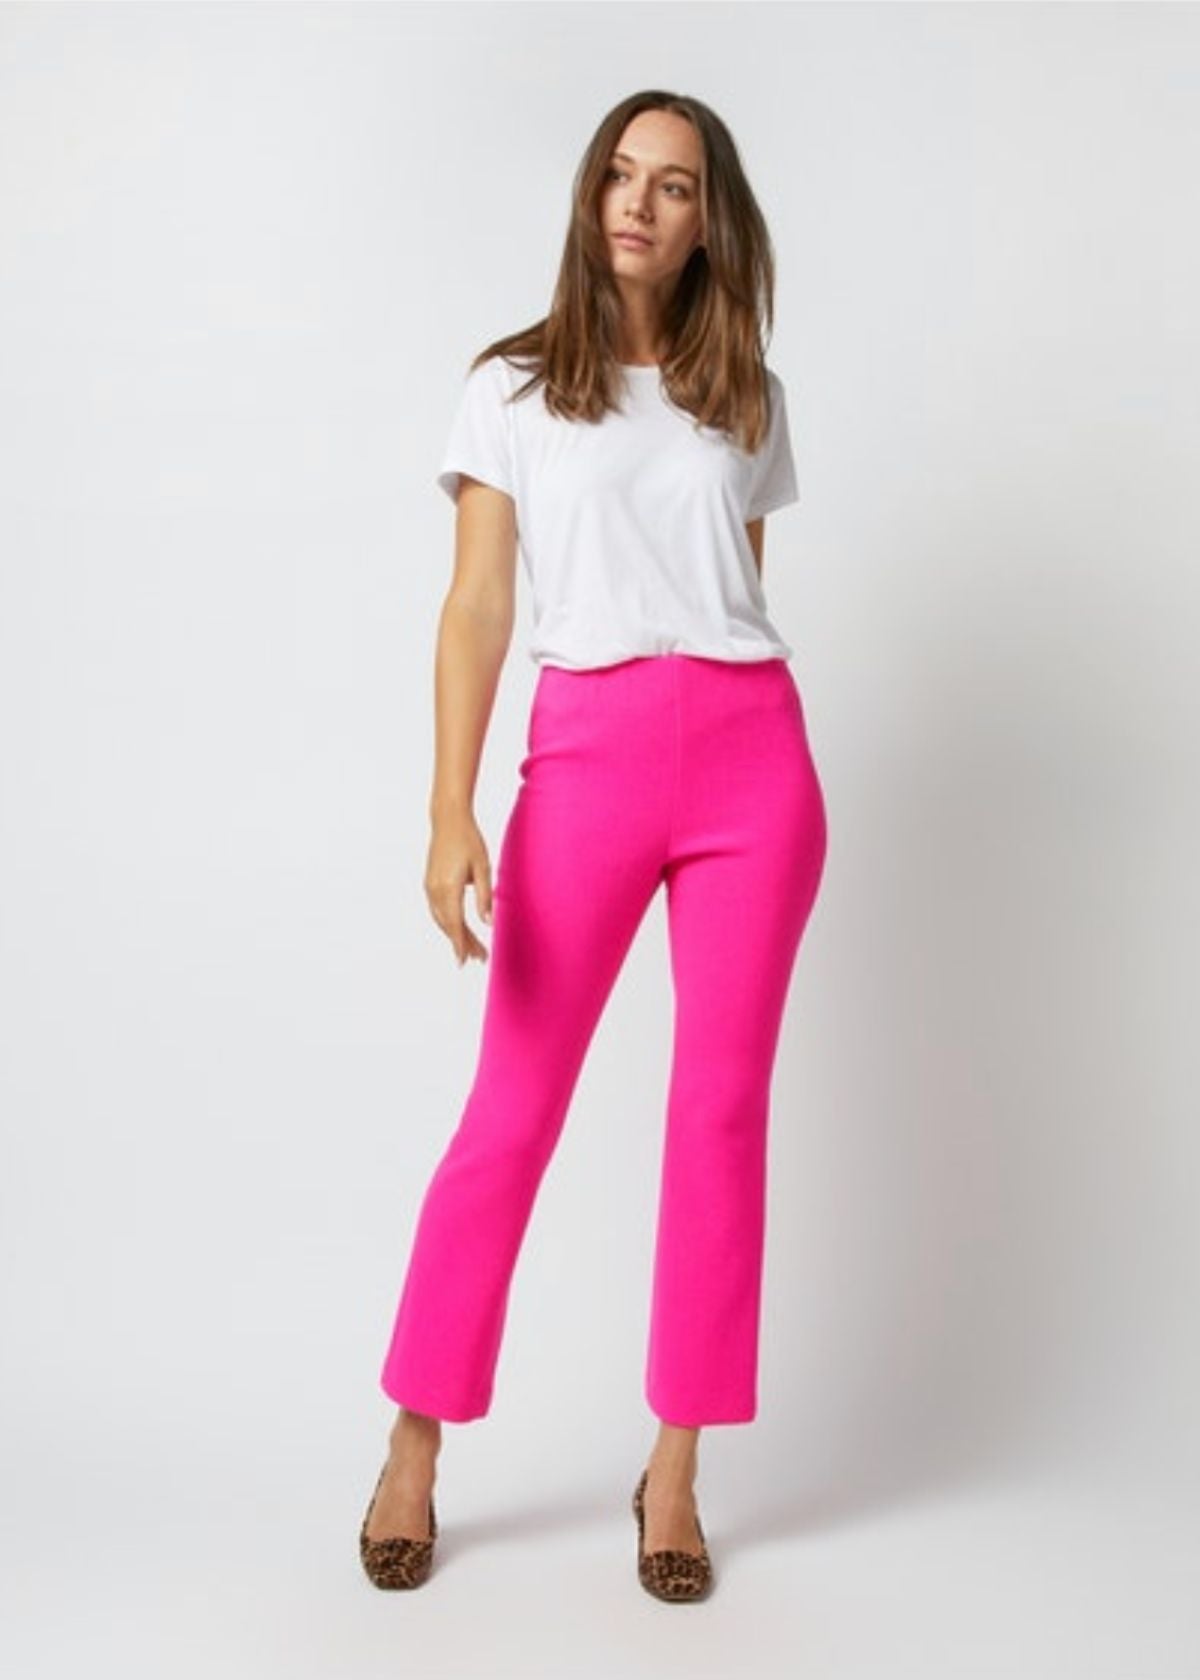 ANN MASHBURN Faye Flare Cropped Pant - Fluorescent Pink